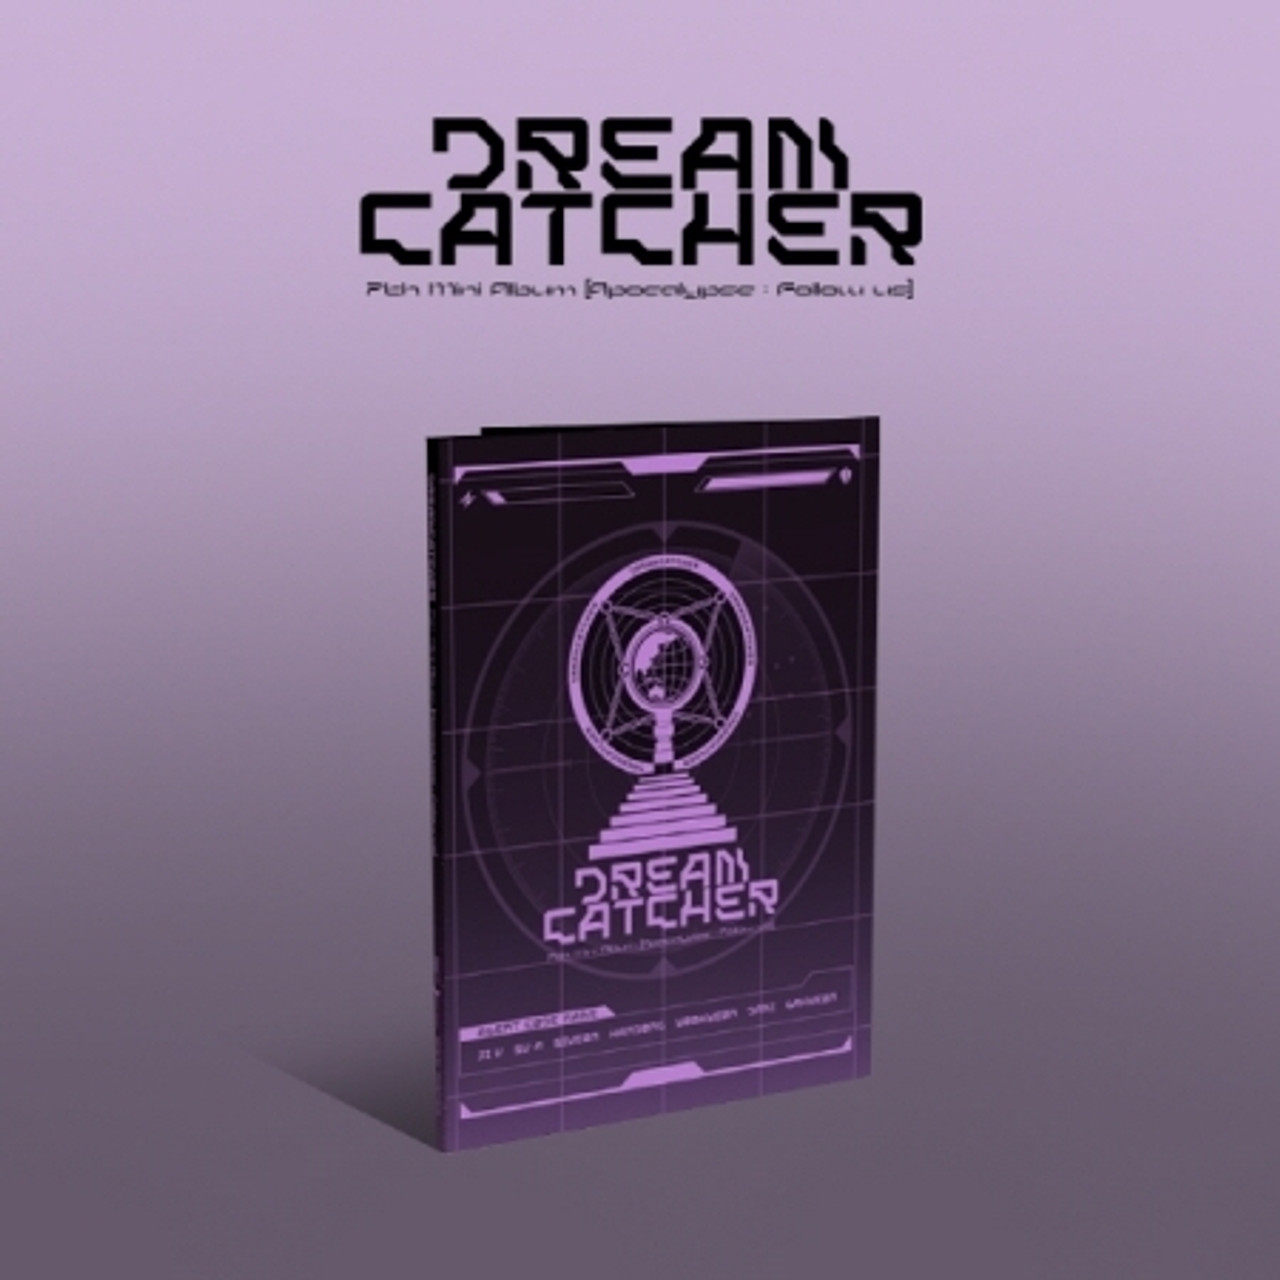 Dreamcatcher  Apocalypse  Follow us Platform Album